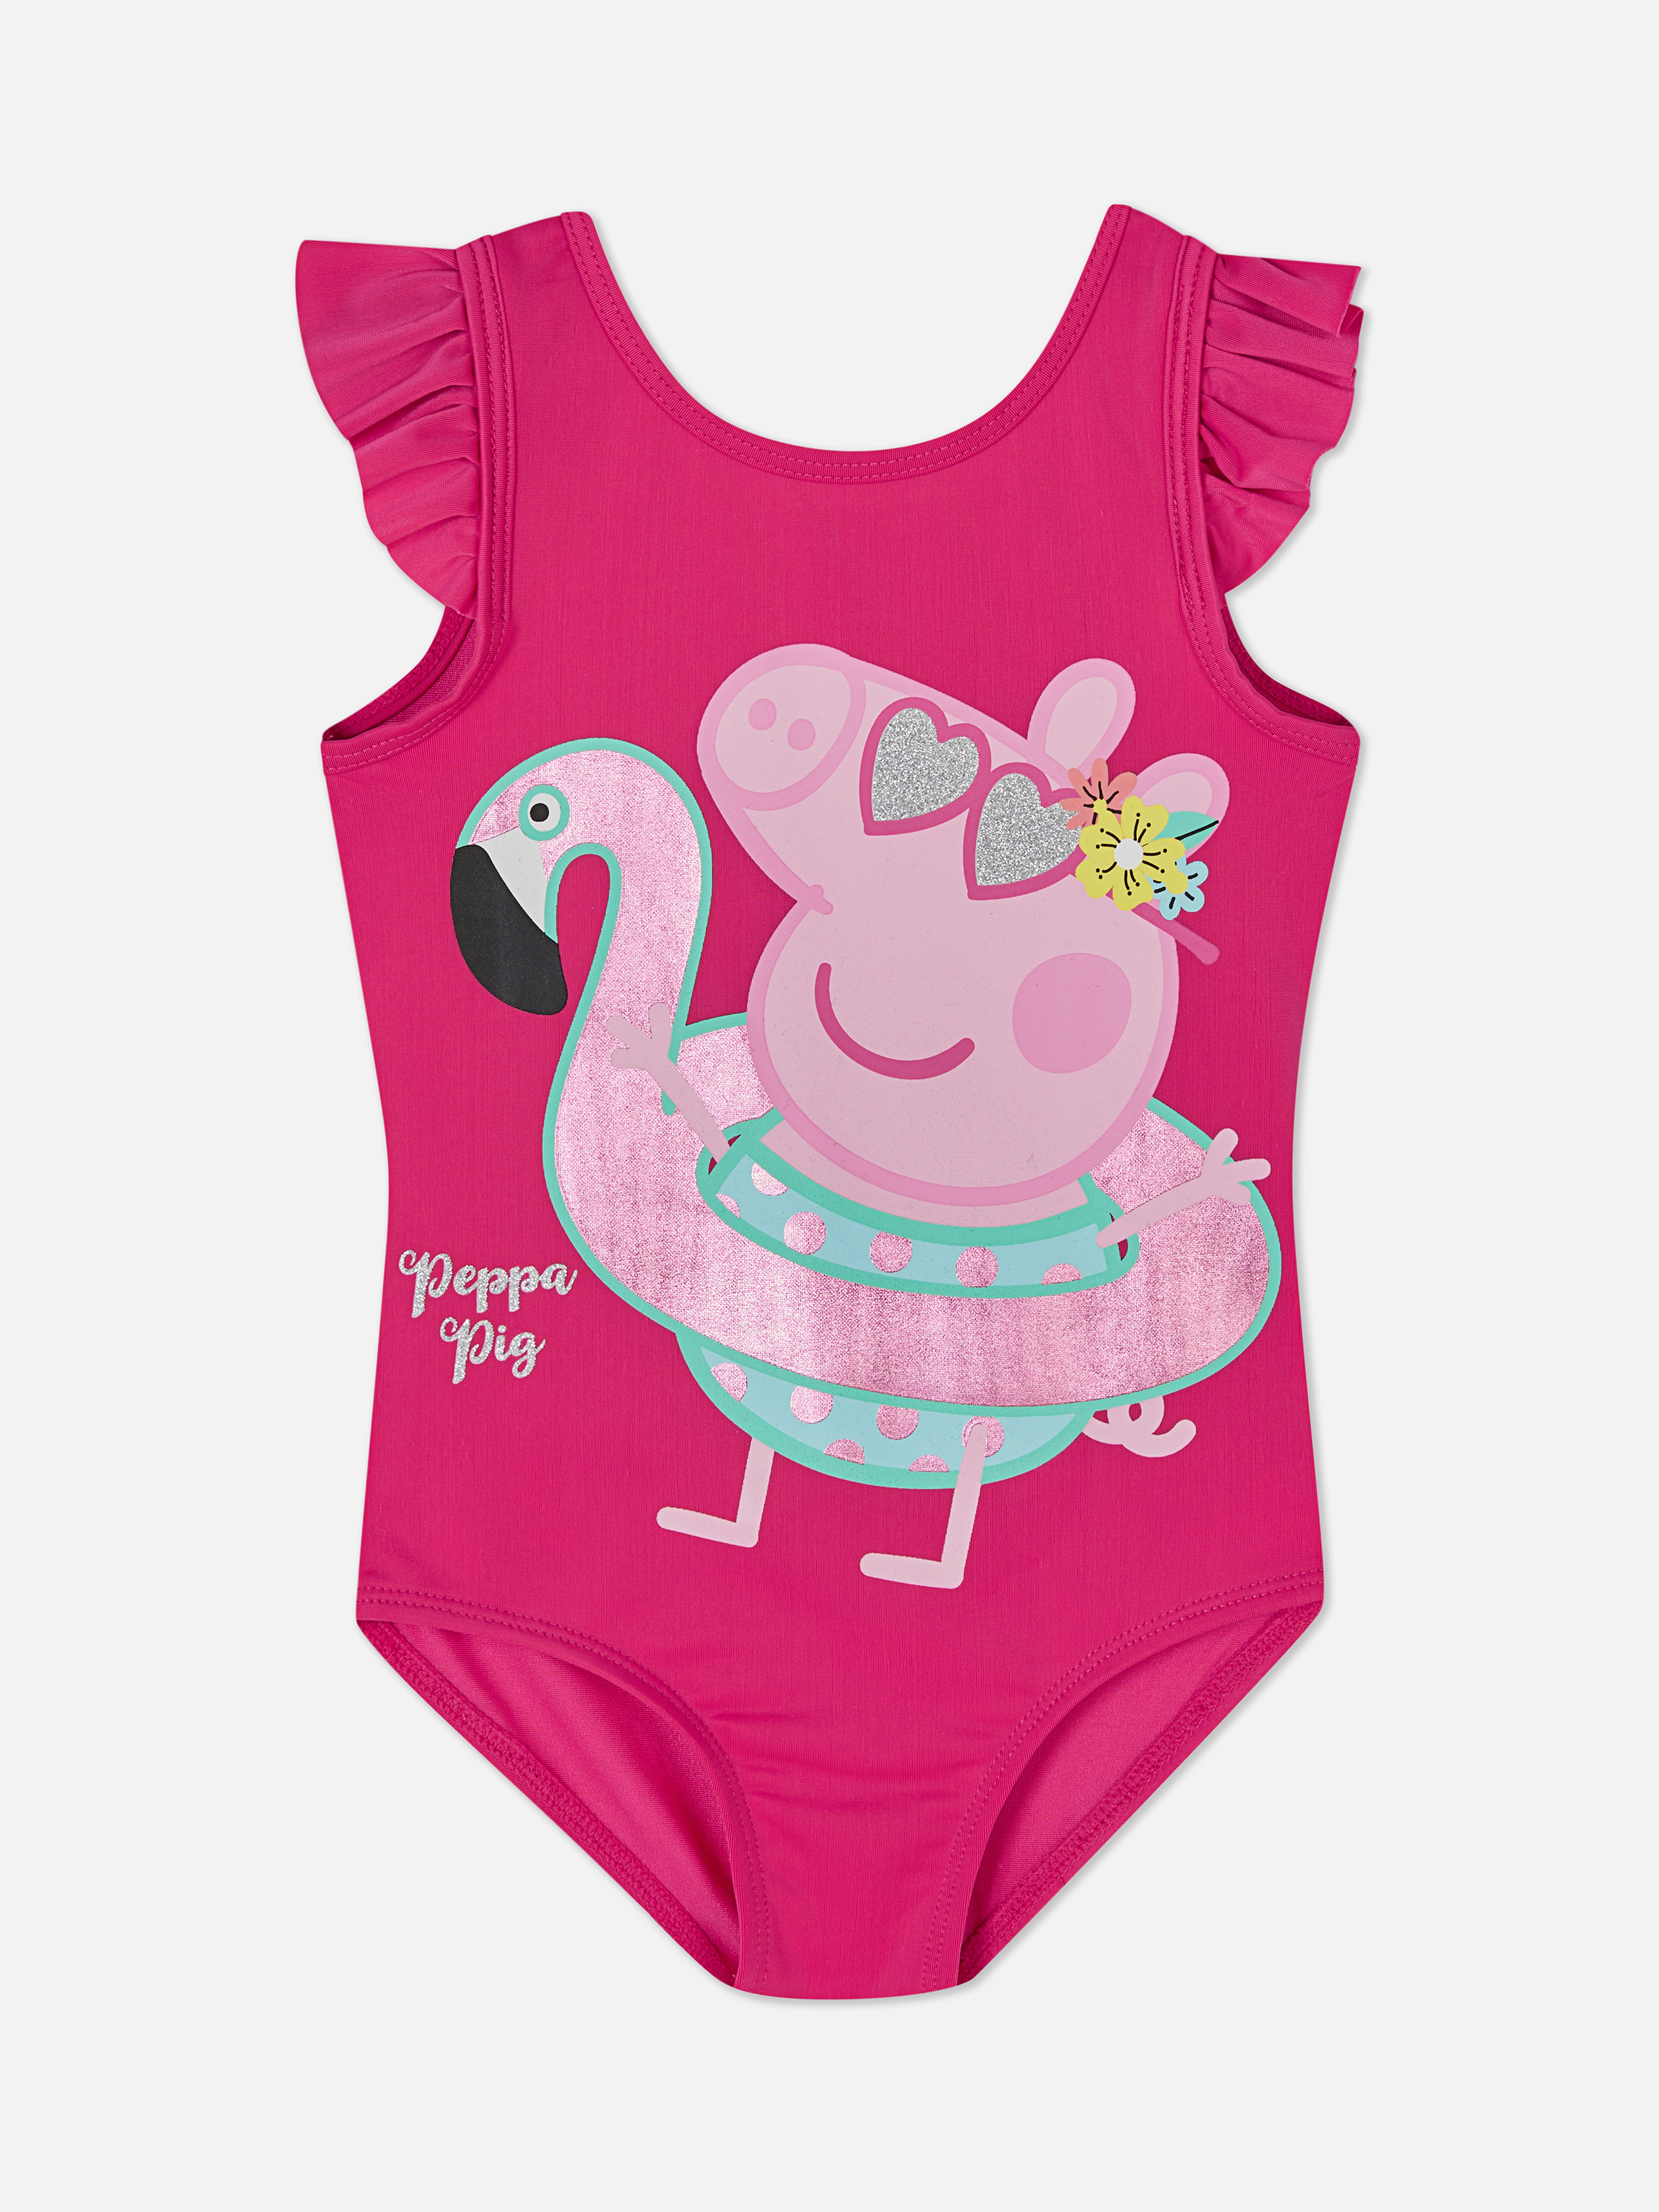 Peppa Pig Glitter Swimsuit